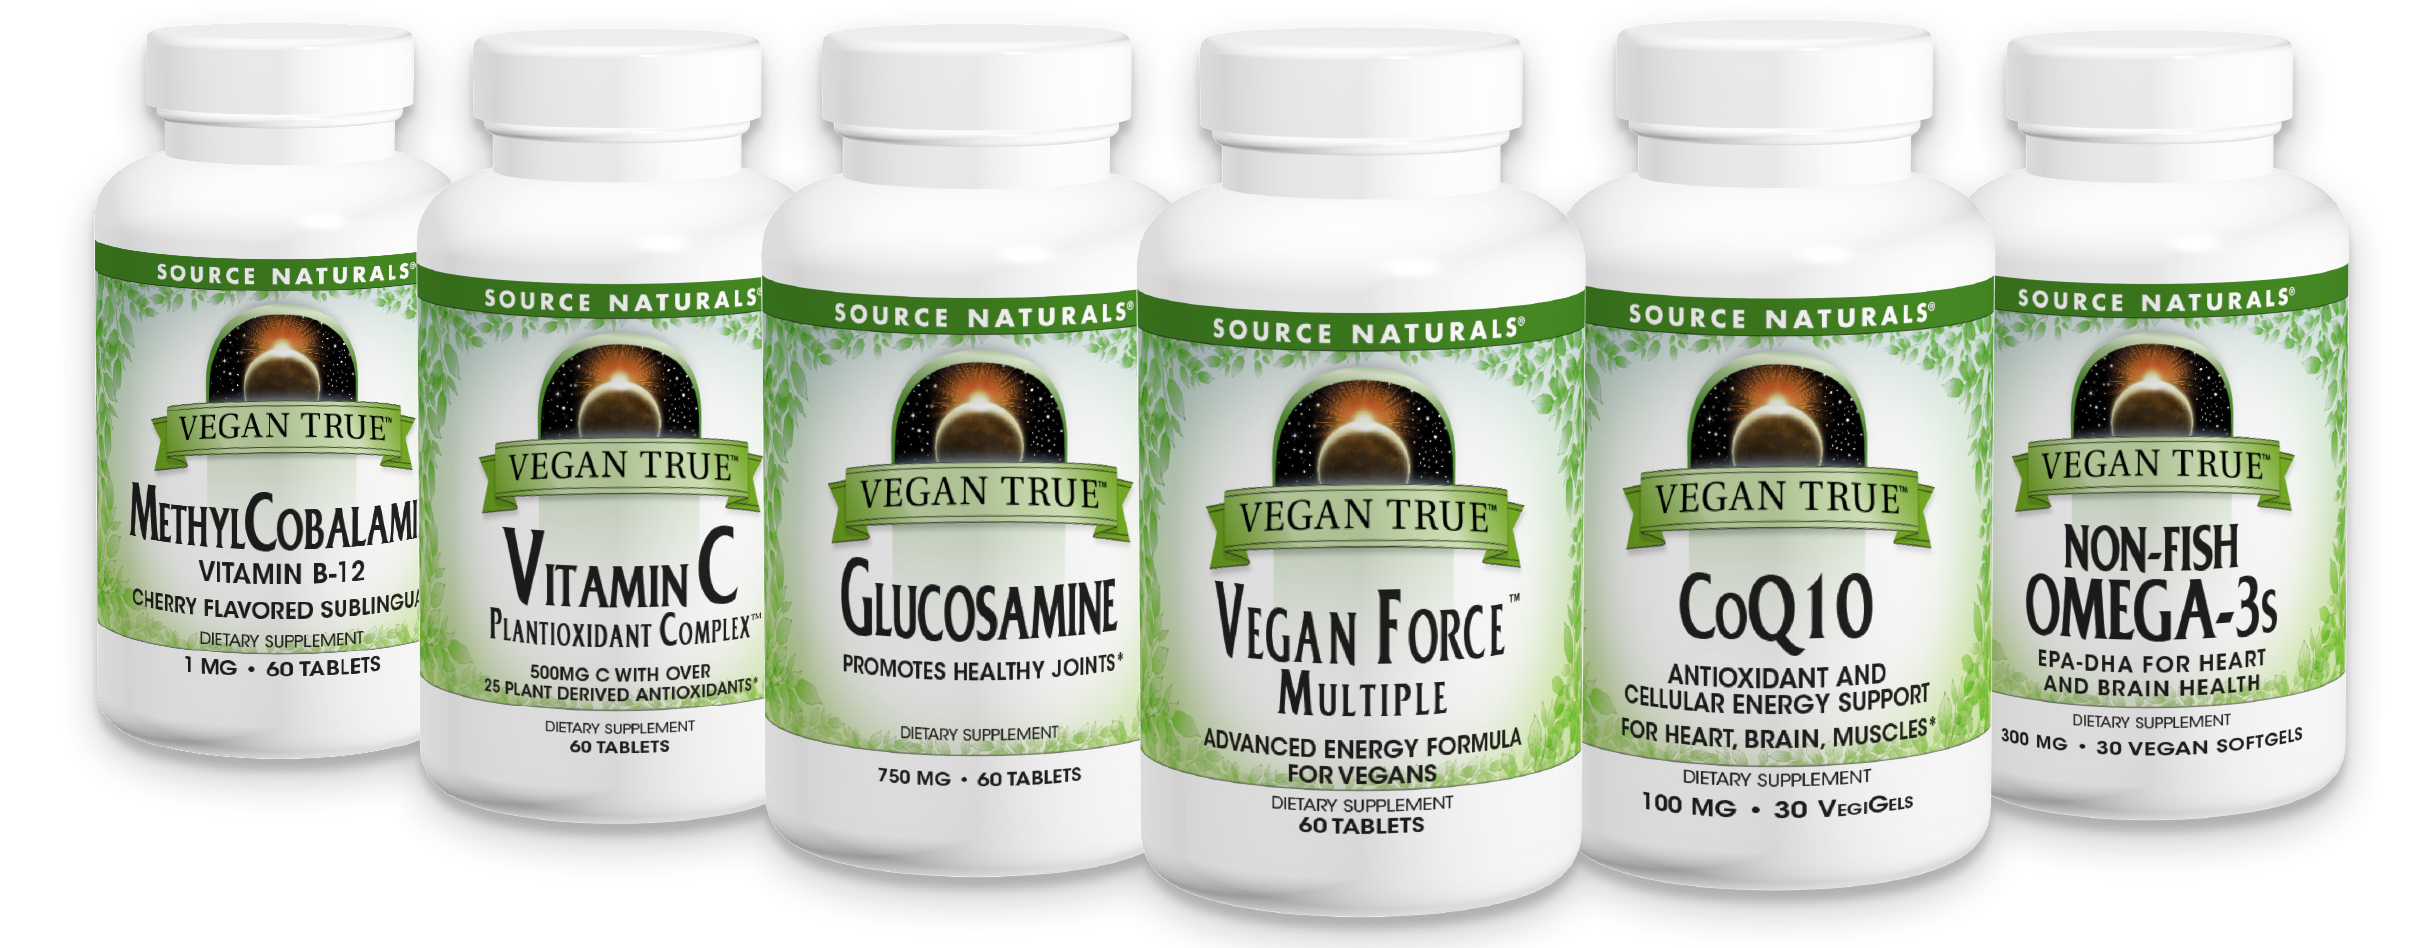 Source Naturals Vegan True Supplements